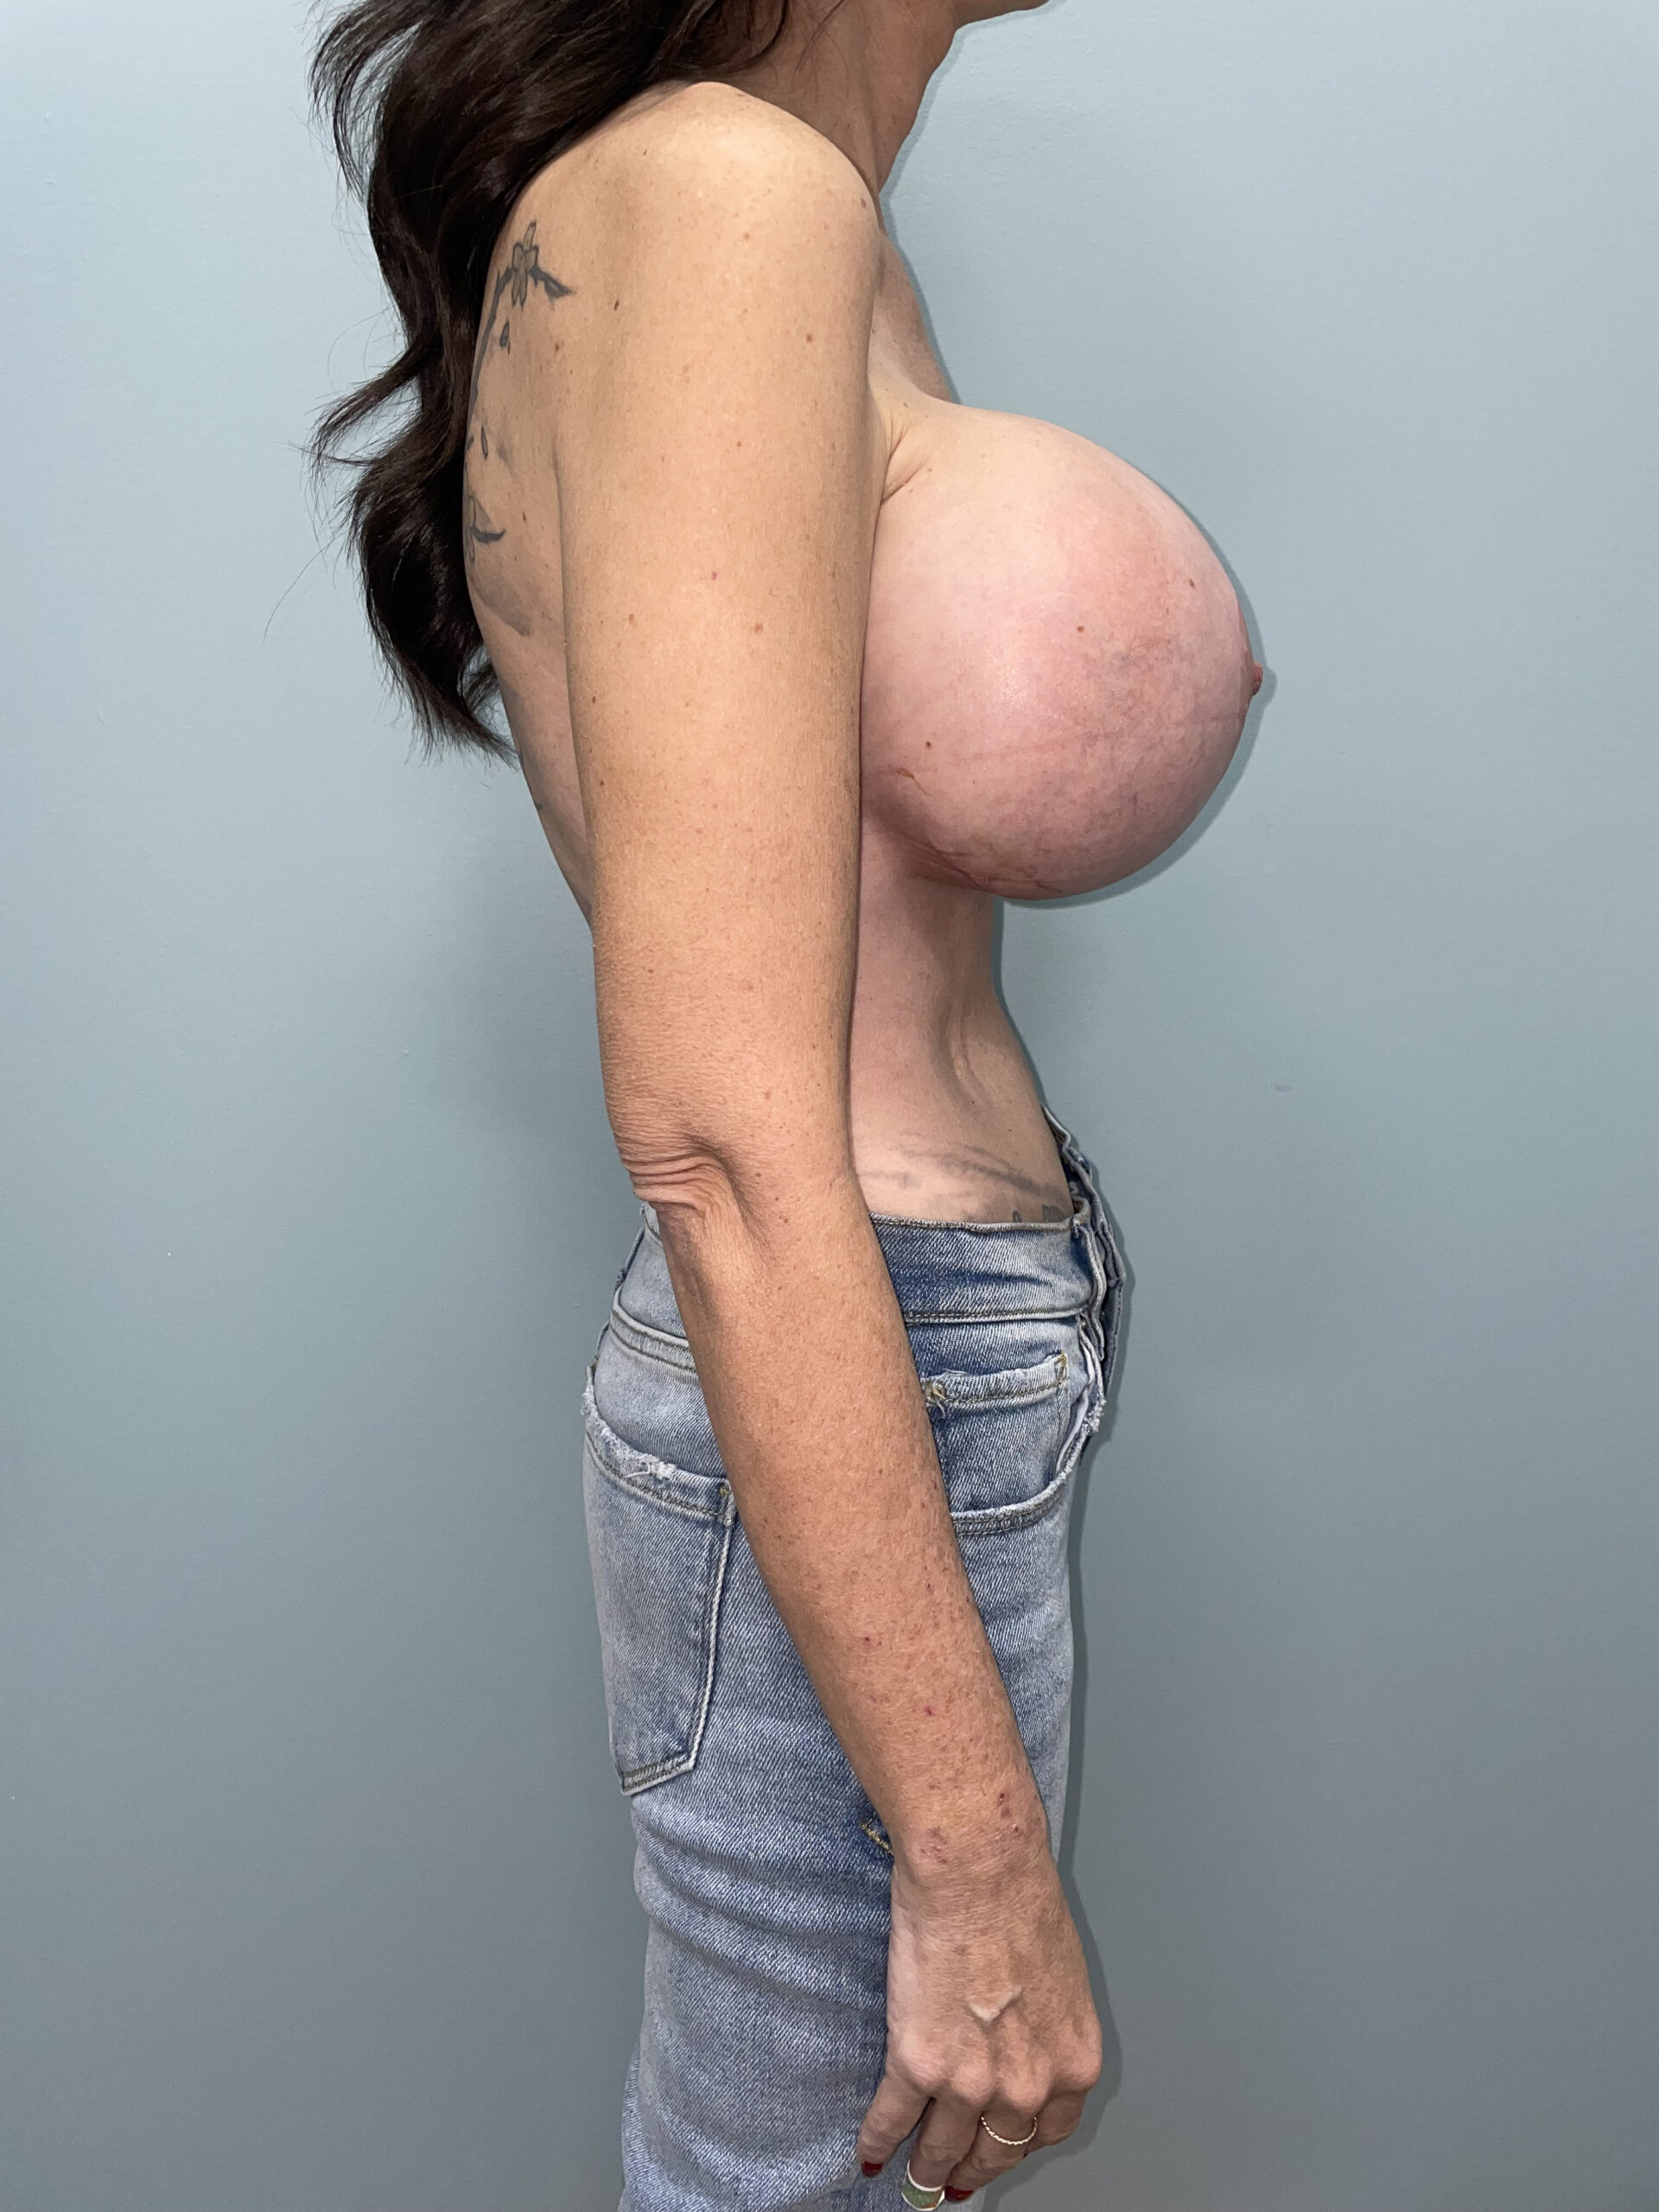 Breast Augmentation Patient Photo - Case 3752 - after view